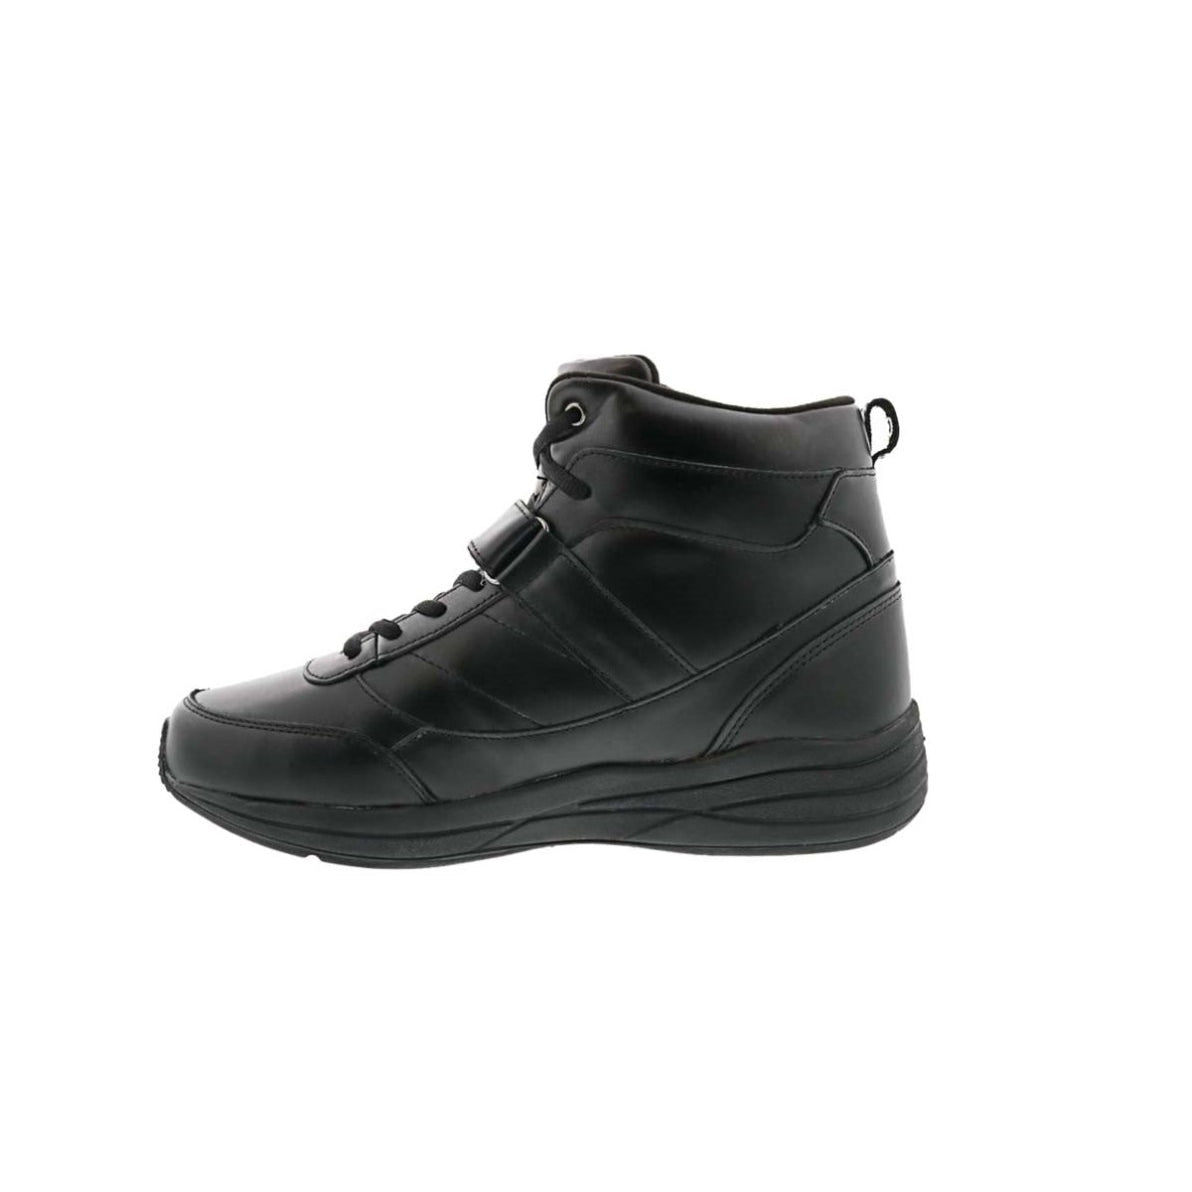 DREW PULSE MEN ATHLETIC SHOE IN BLACK CALF - TLW Shoes